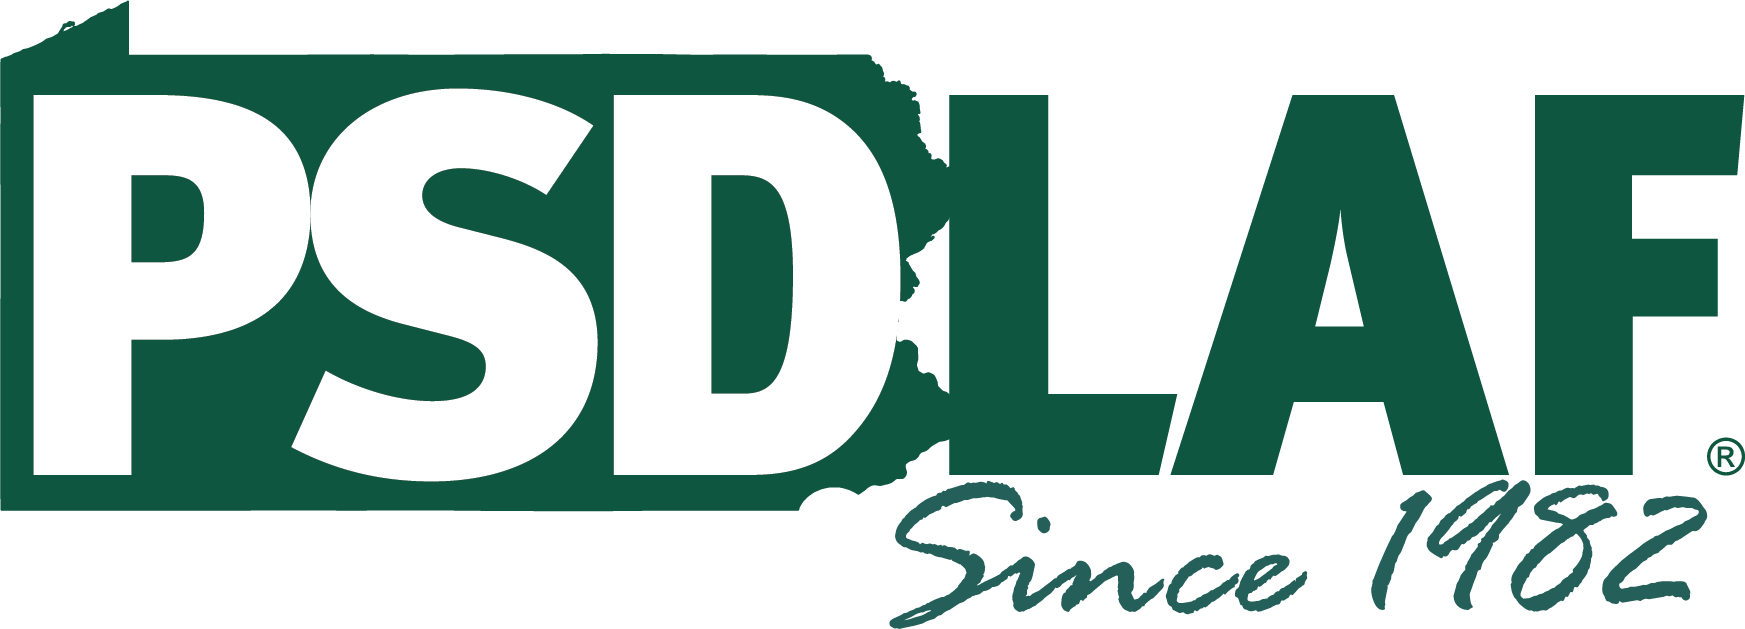 PA School District Liquid Asset Fund (PSDLAF) logo